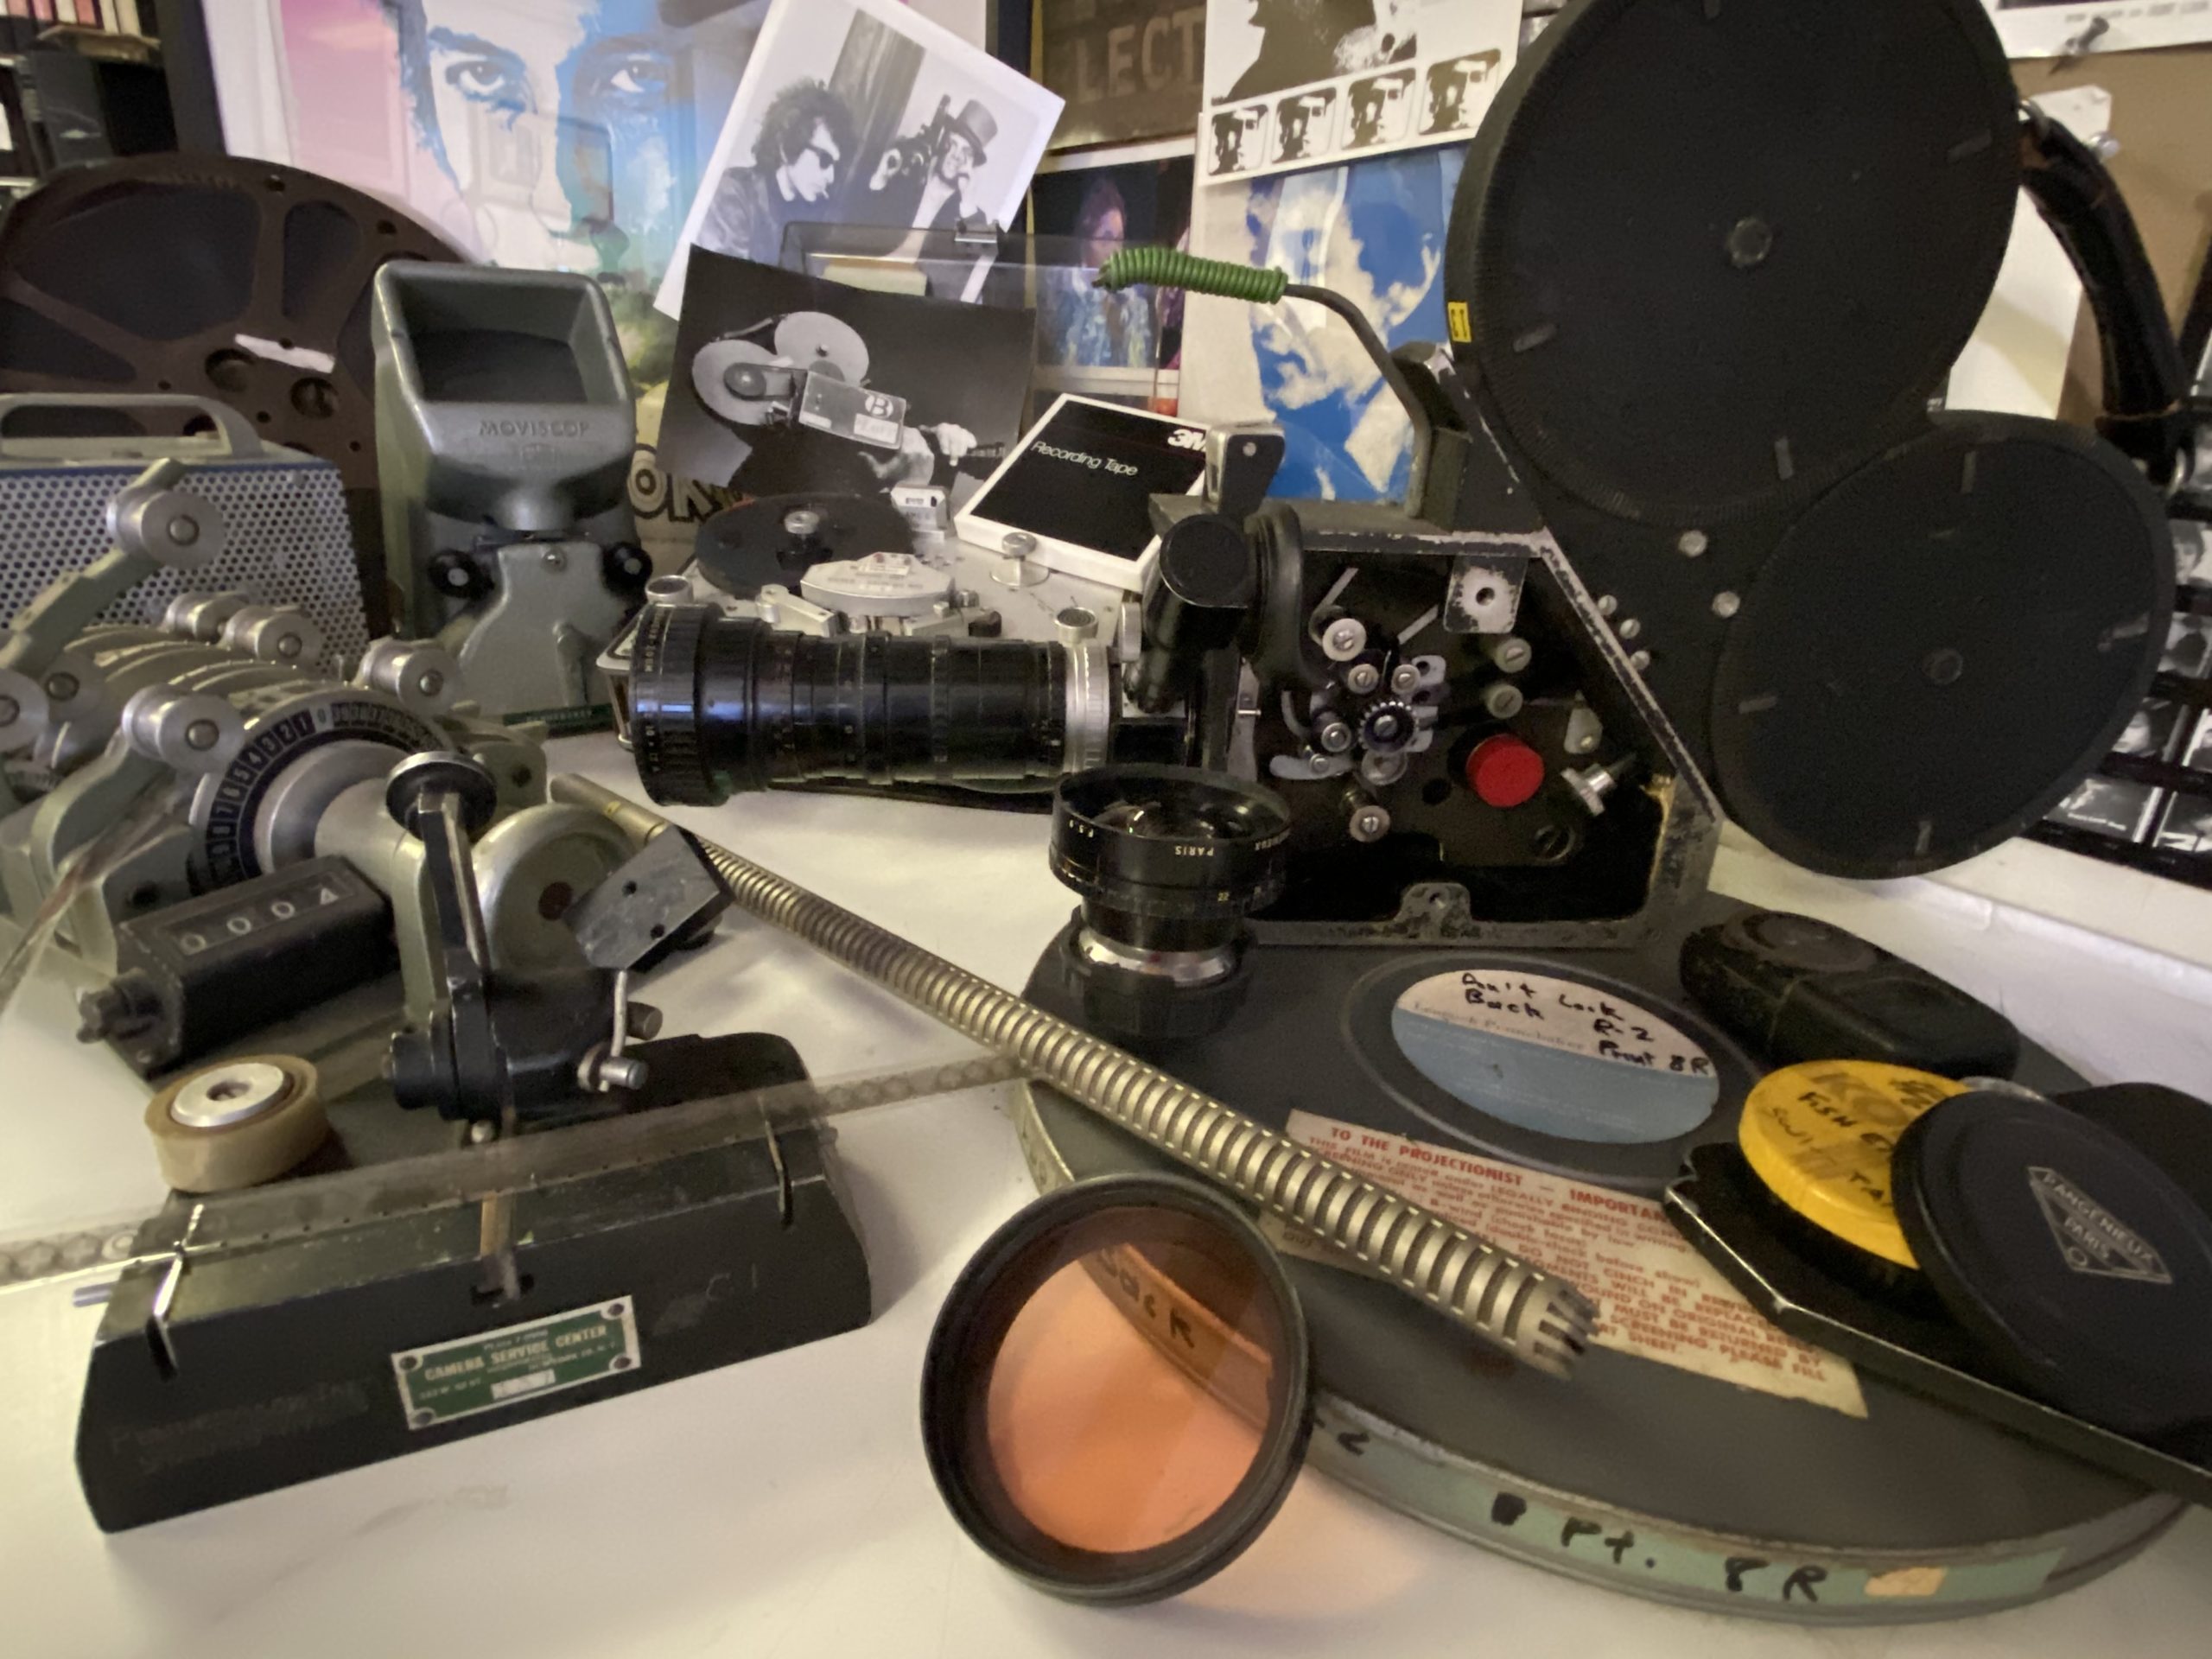 Some of D.A. Pennebaker and Chris Hegedus's filmmaking equipment.